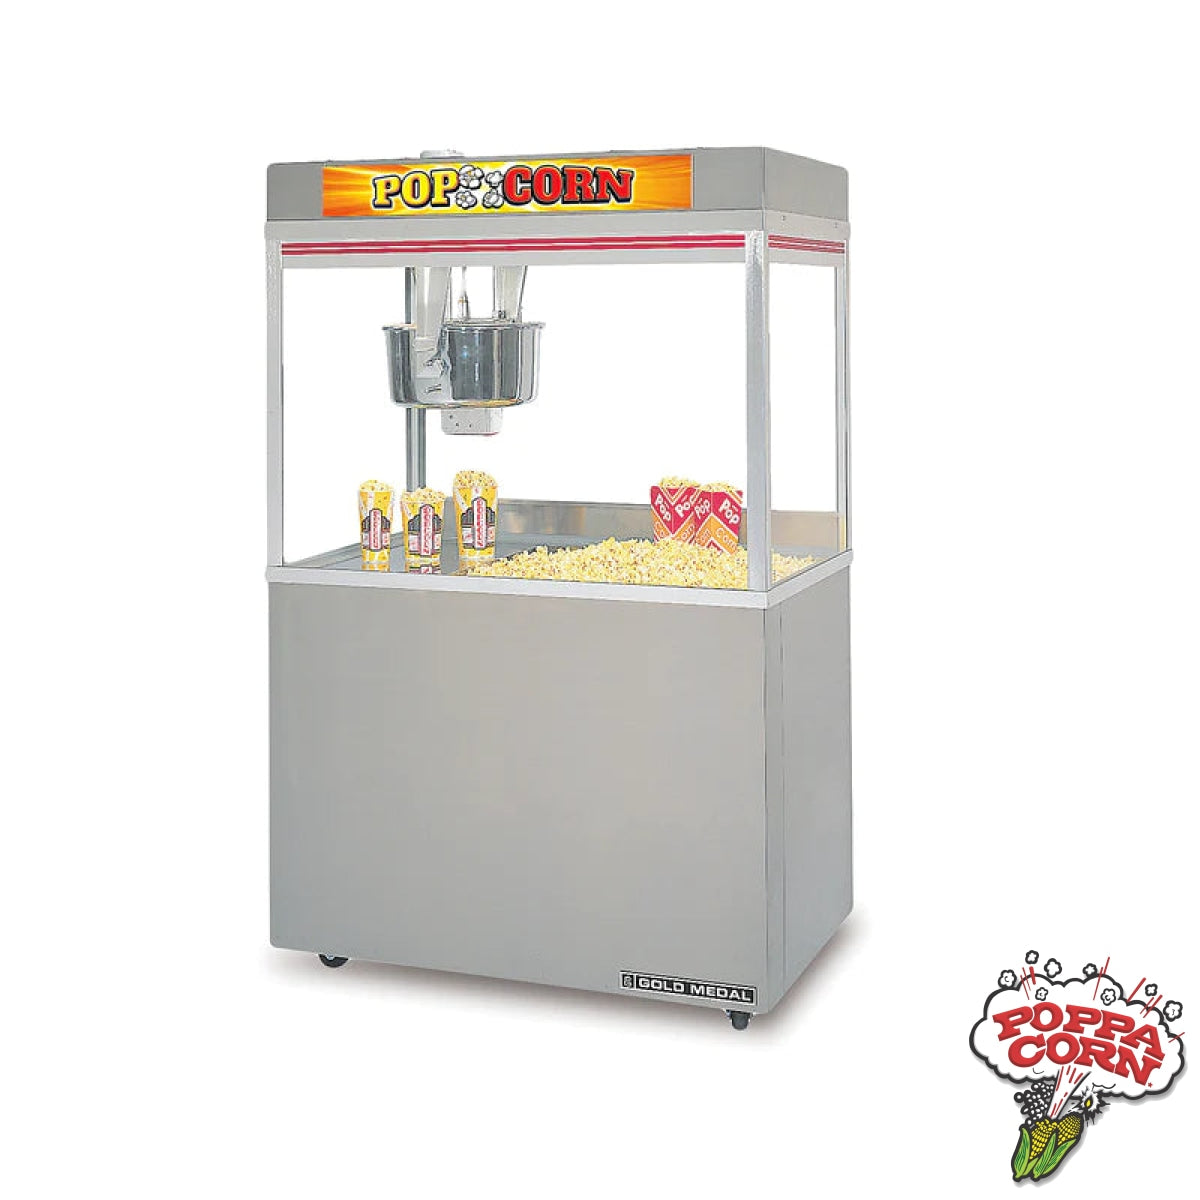 Grand Pop-O-Gold 32-oz. Popcorn Machine with Cabinet - GM2860-00-110 - Poppa Corn Corp